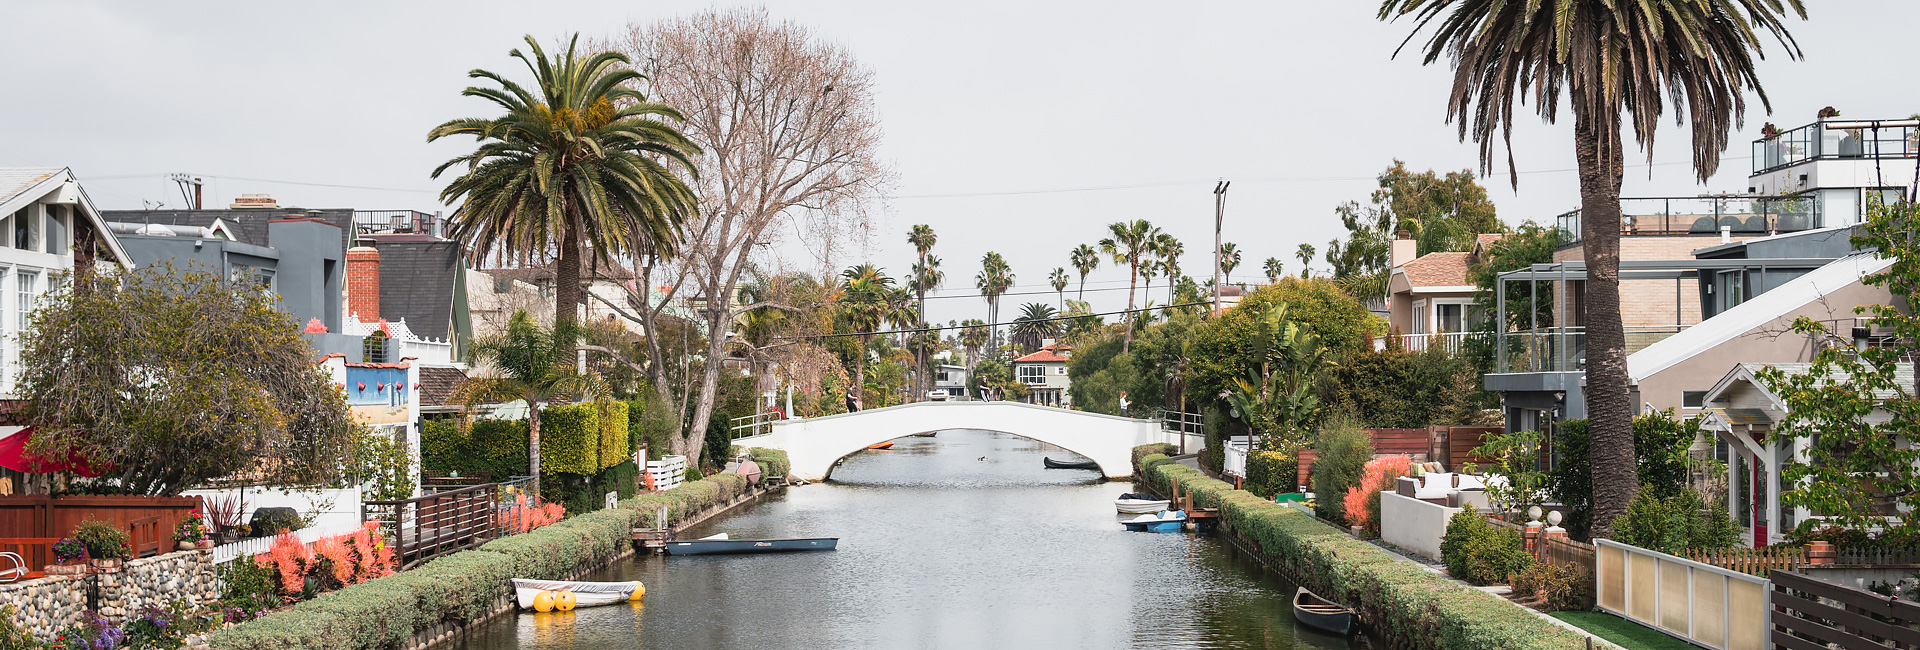 Stroll the Venice Canal Historic District in Venice, California.